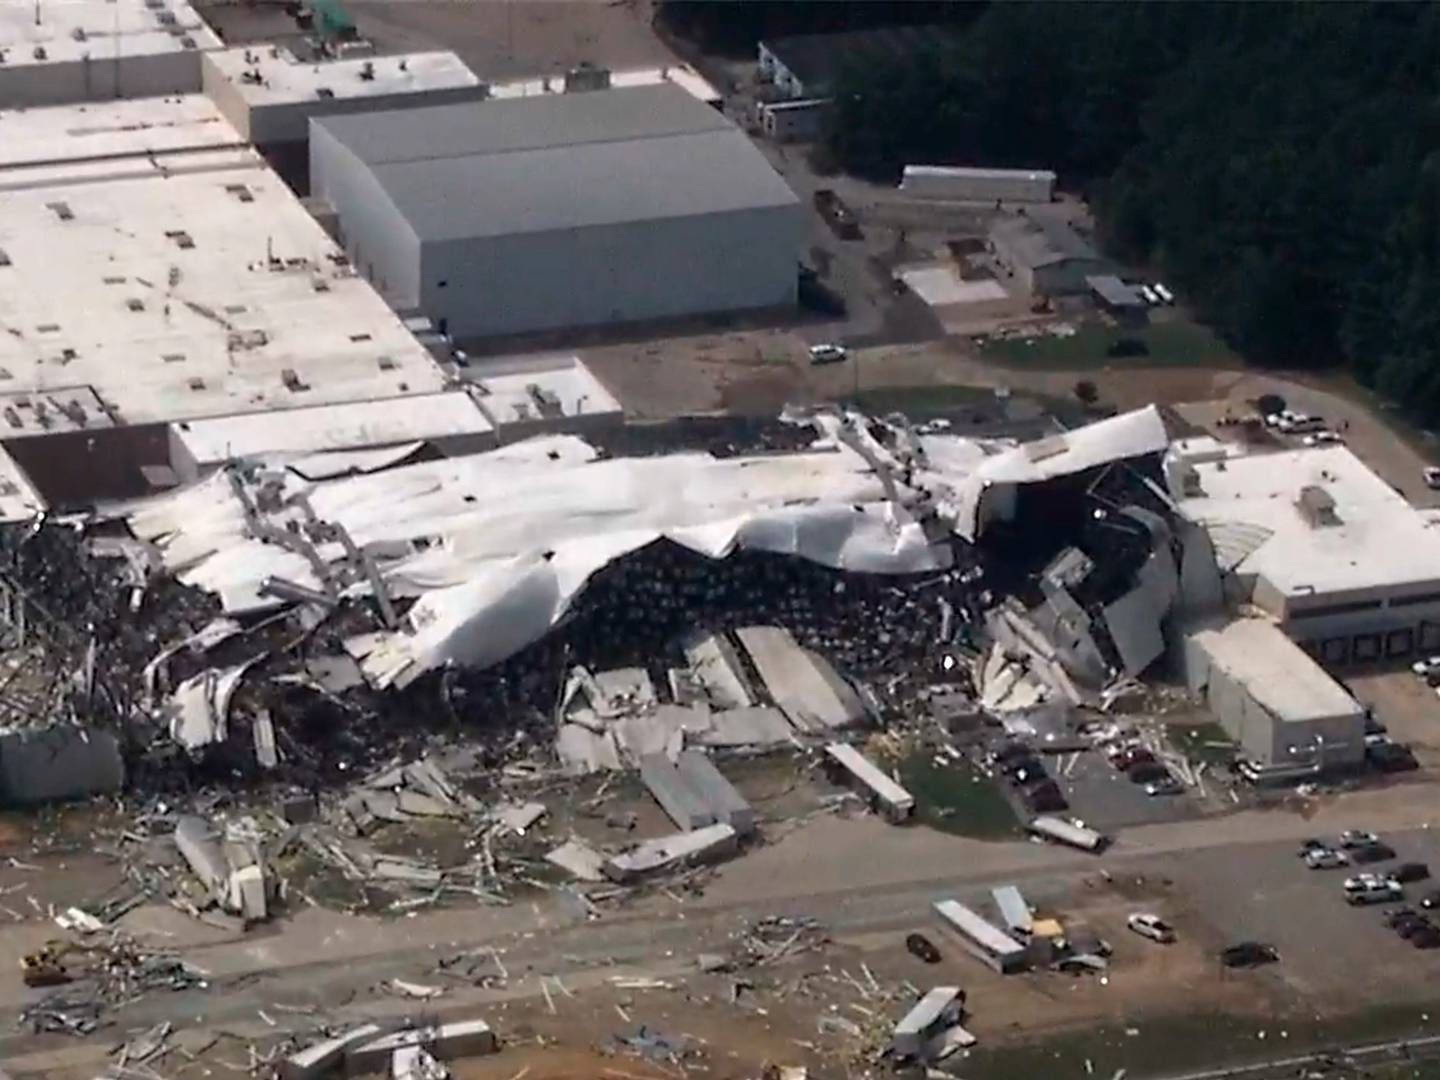 ØDELAGT: Pfizers anlegg i Rocky Mount er ikke sterilt lenger, da en tornado ødela hele varelageret tidligere i sommer. | Foto: WTVD via AP/NTB